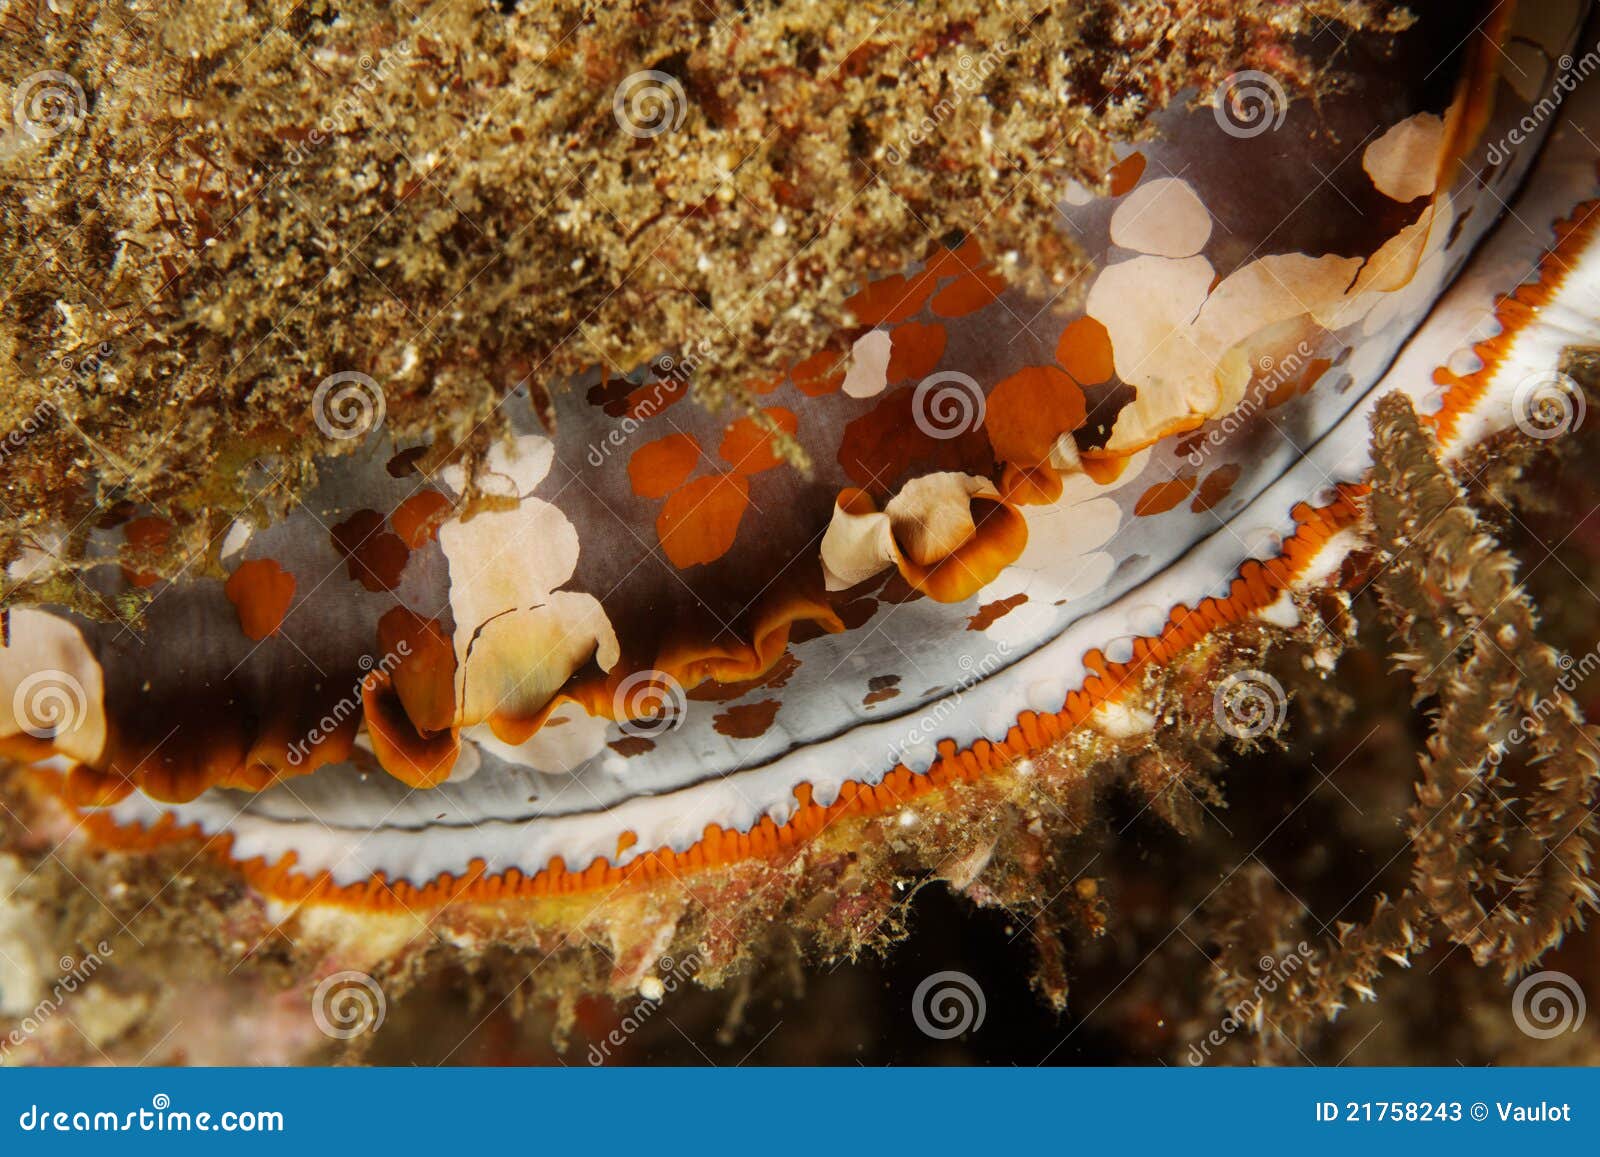 spondylus varius - andaman sea